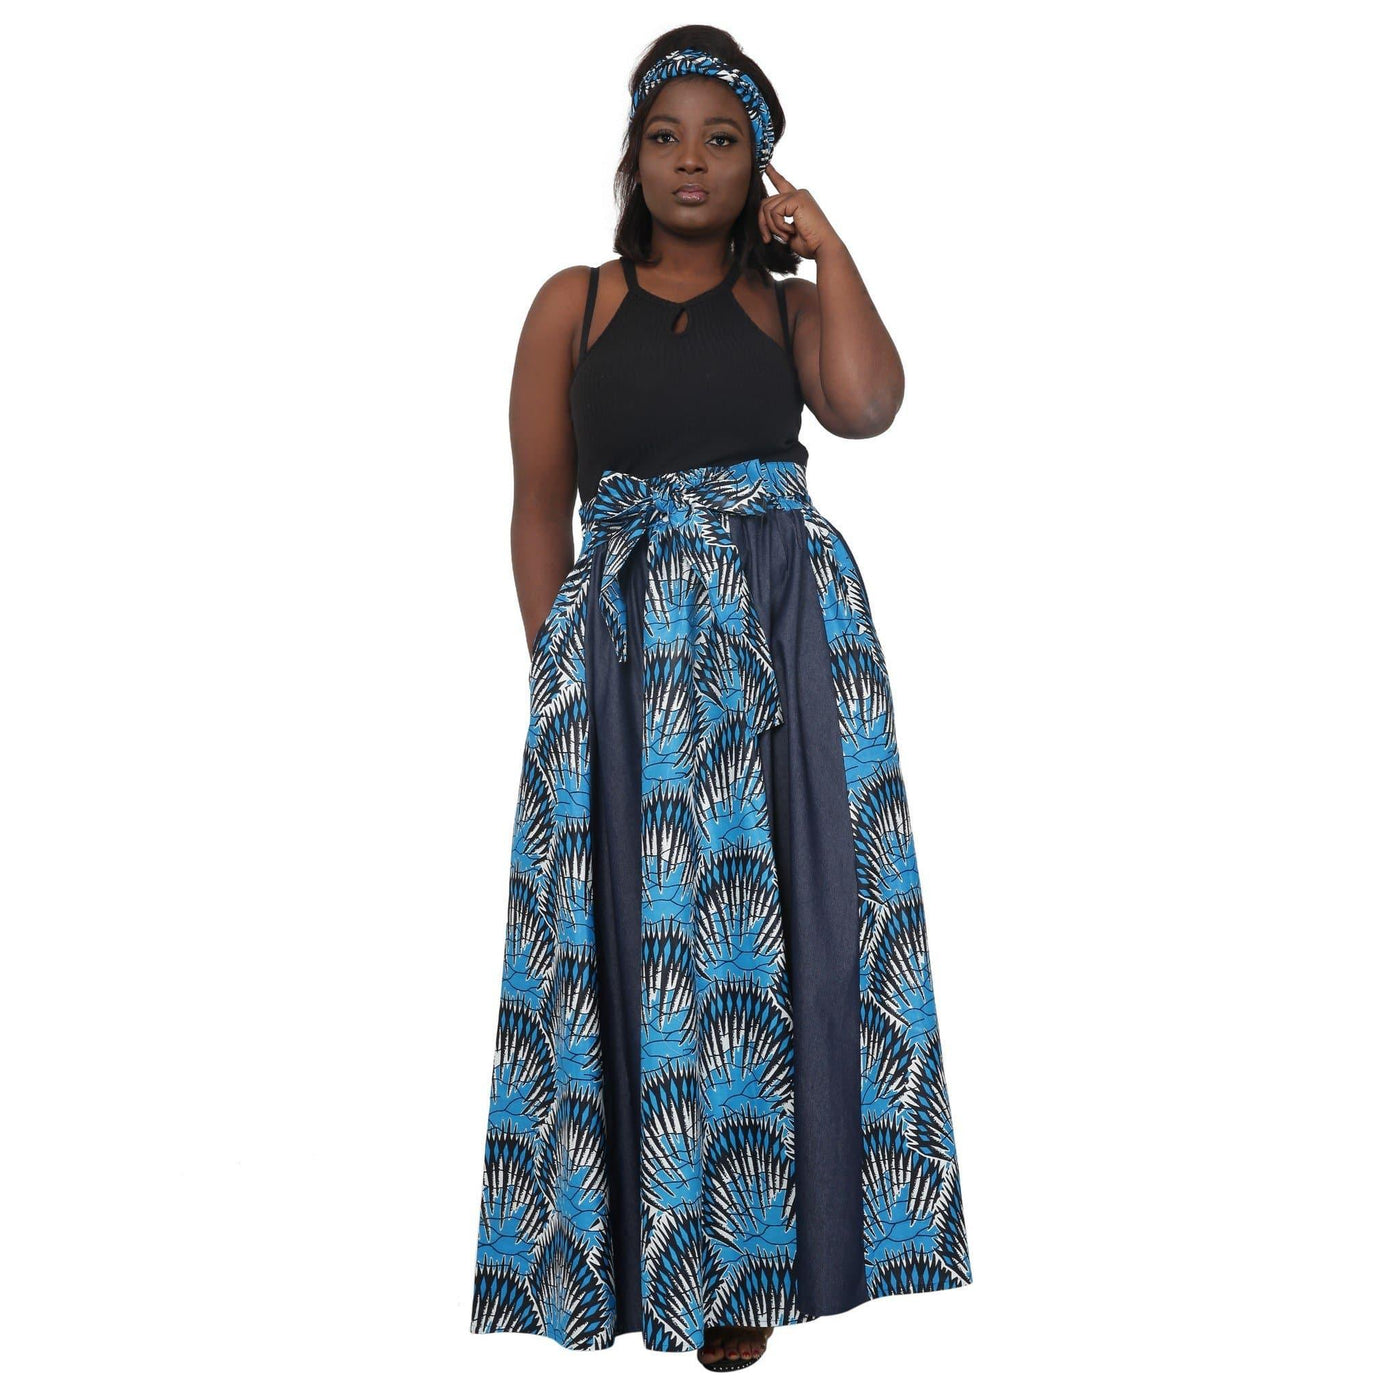 Denim and African Print Long Maxi Skirt 17617-80 - Advance Apparels Inc